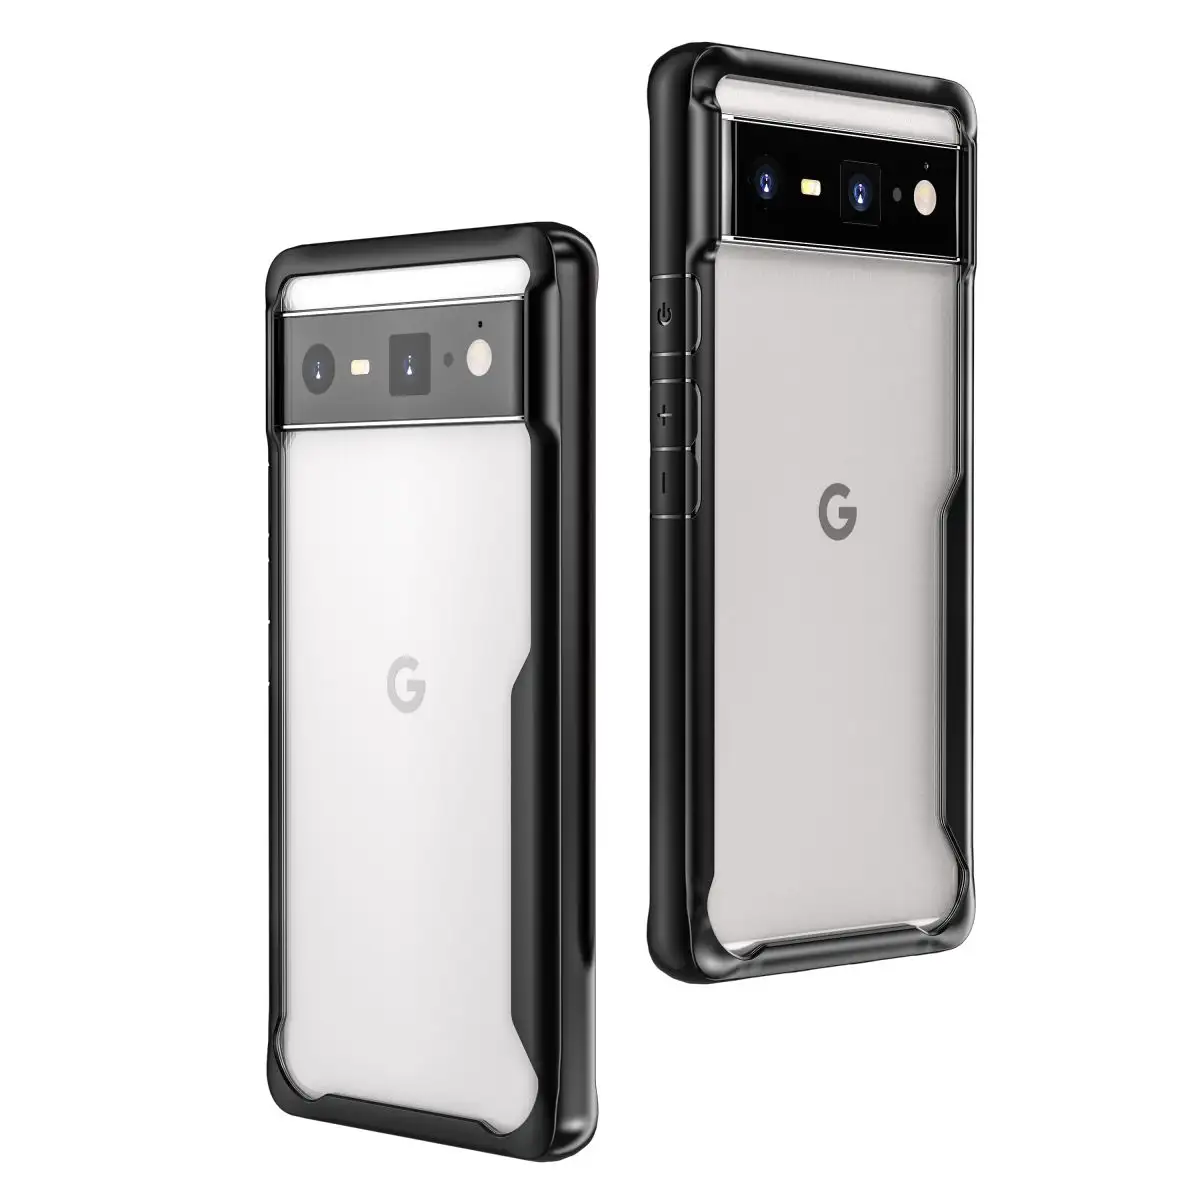 Casing ponsel kristal hitam, untuk Google Pixel 6 6Pro TPU hibrida transparan